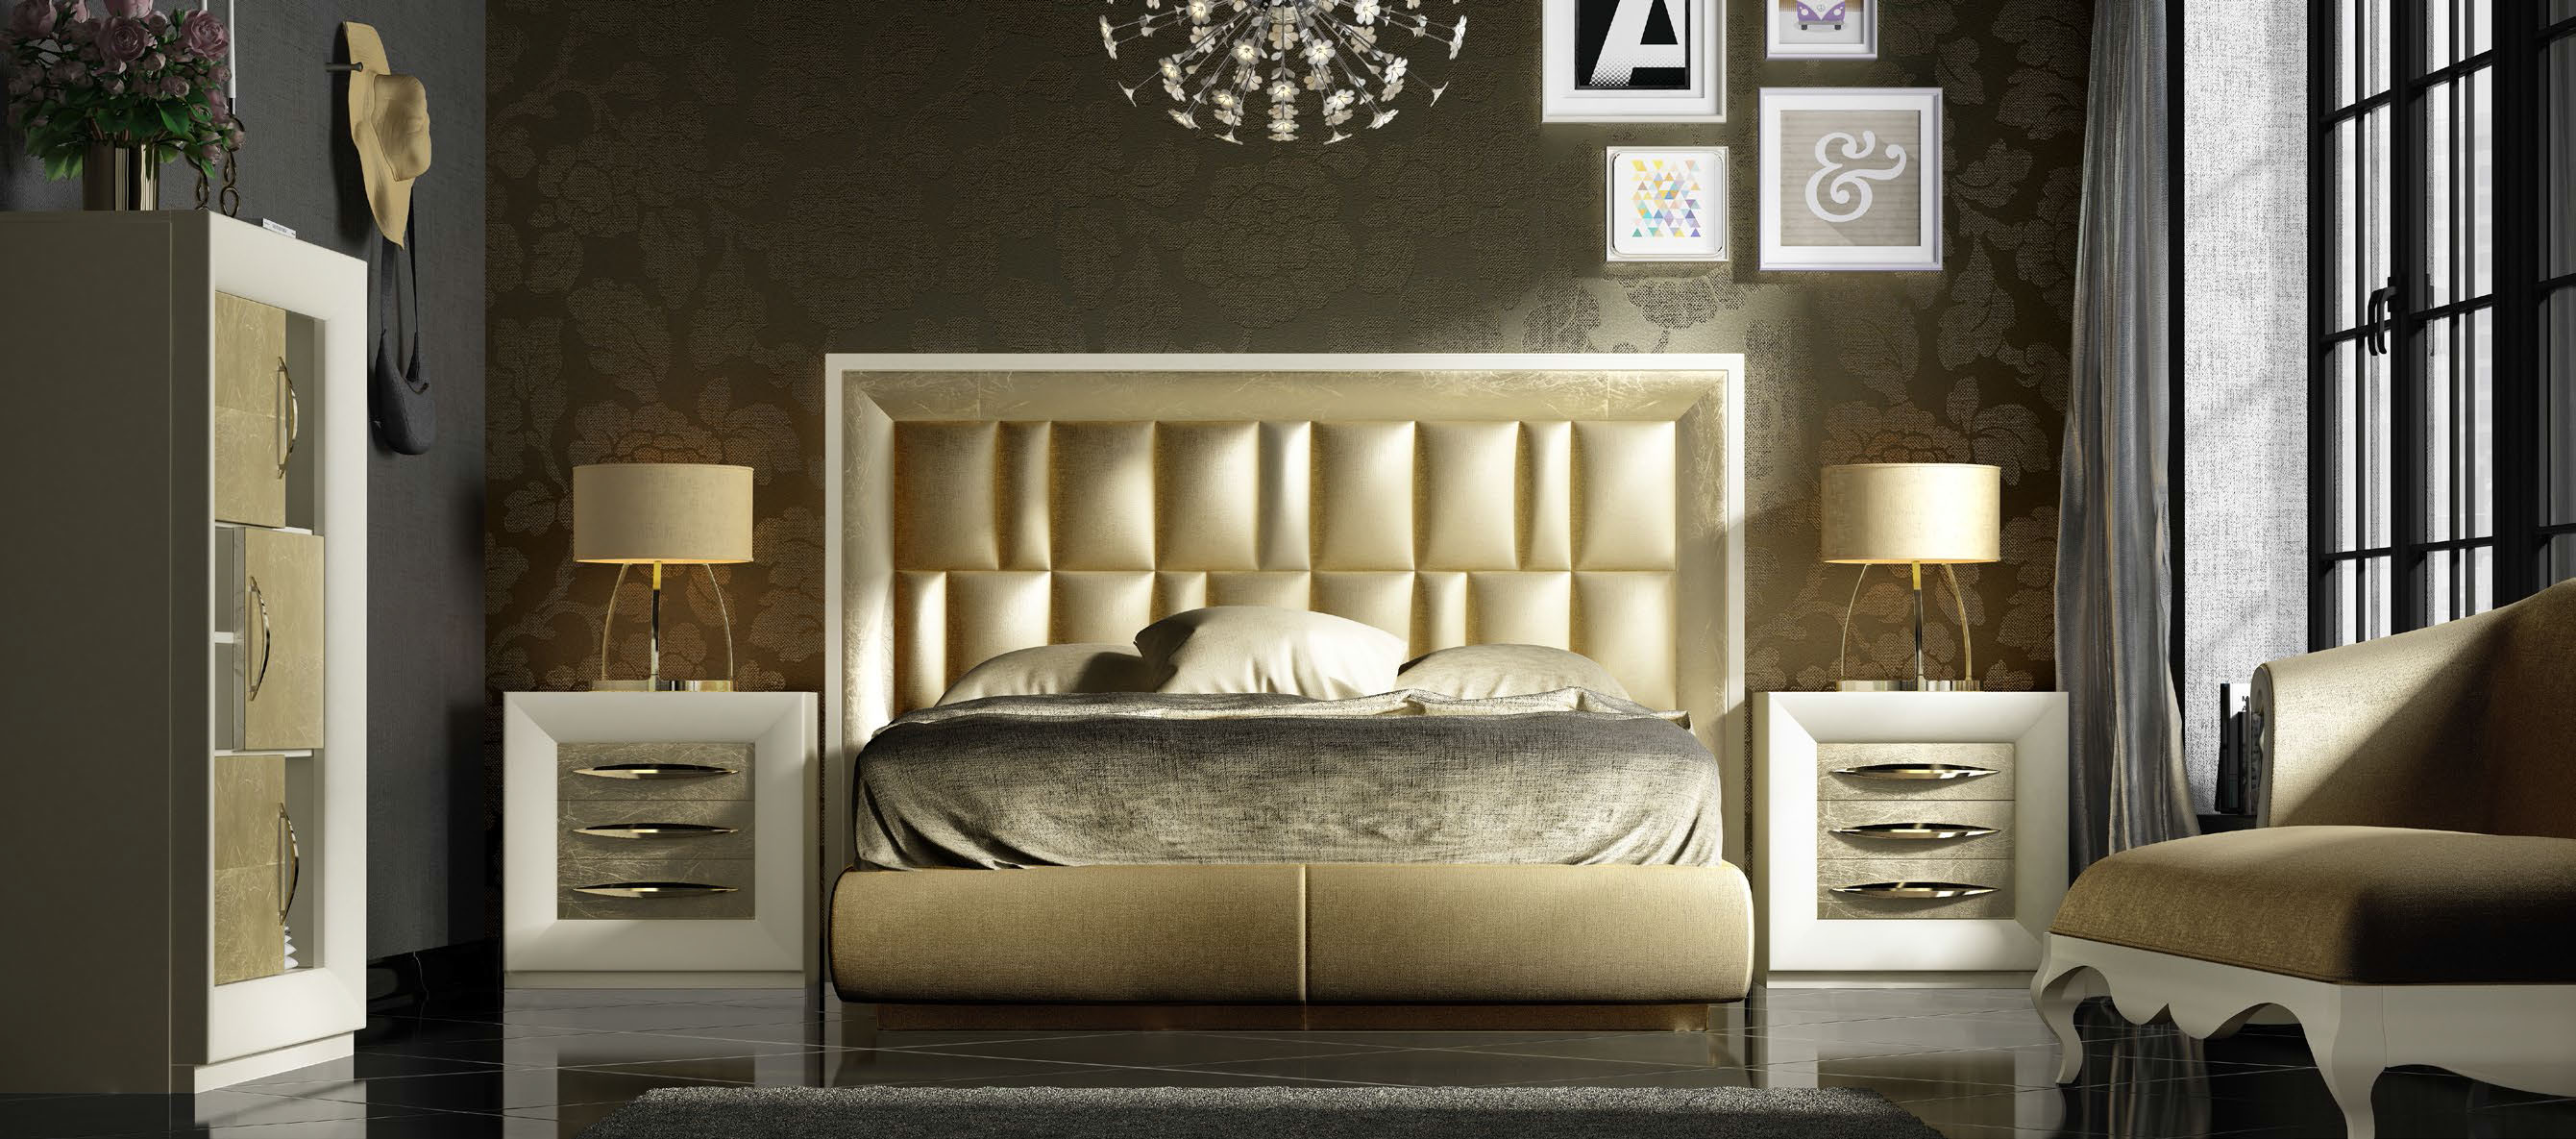 Brands Franco Furniture Bedrooms vol1, Spain DOR 118